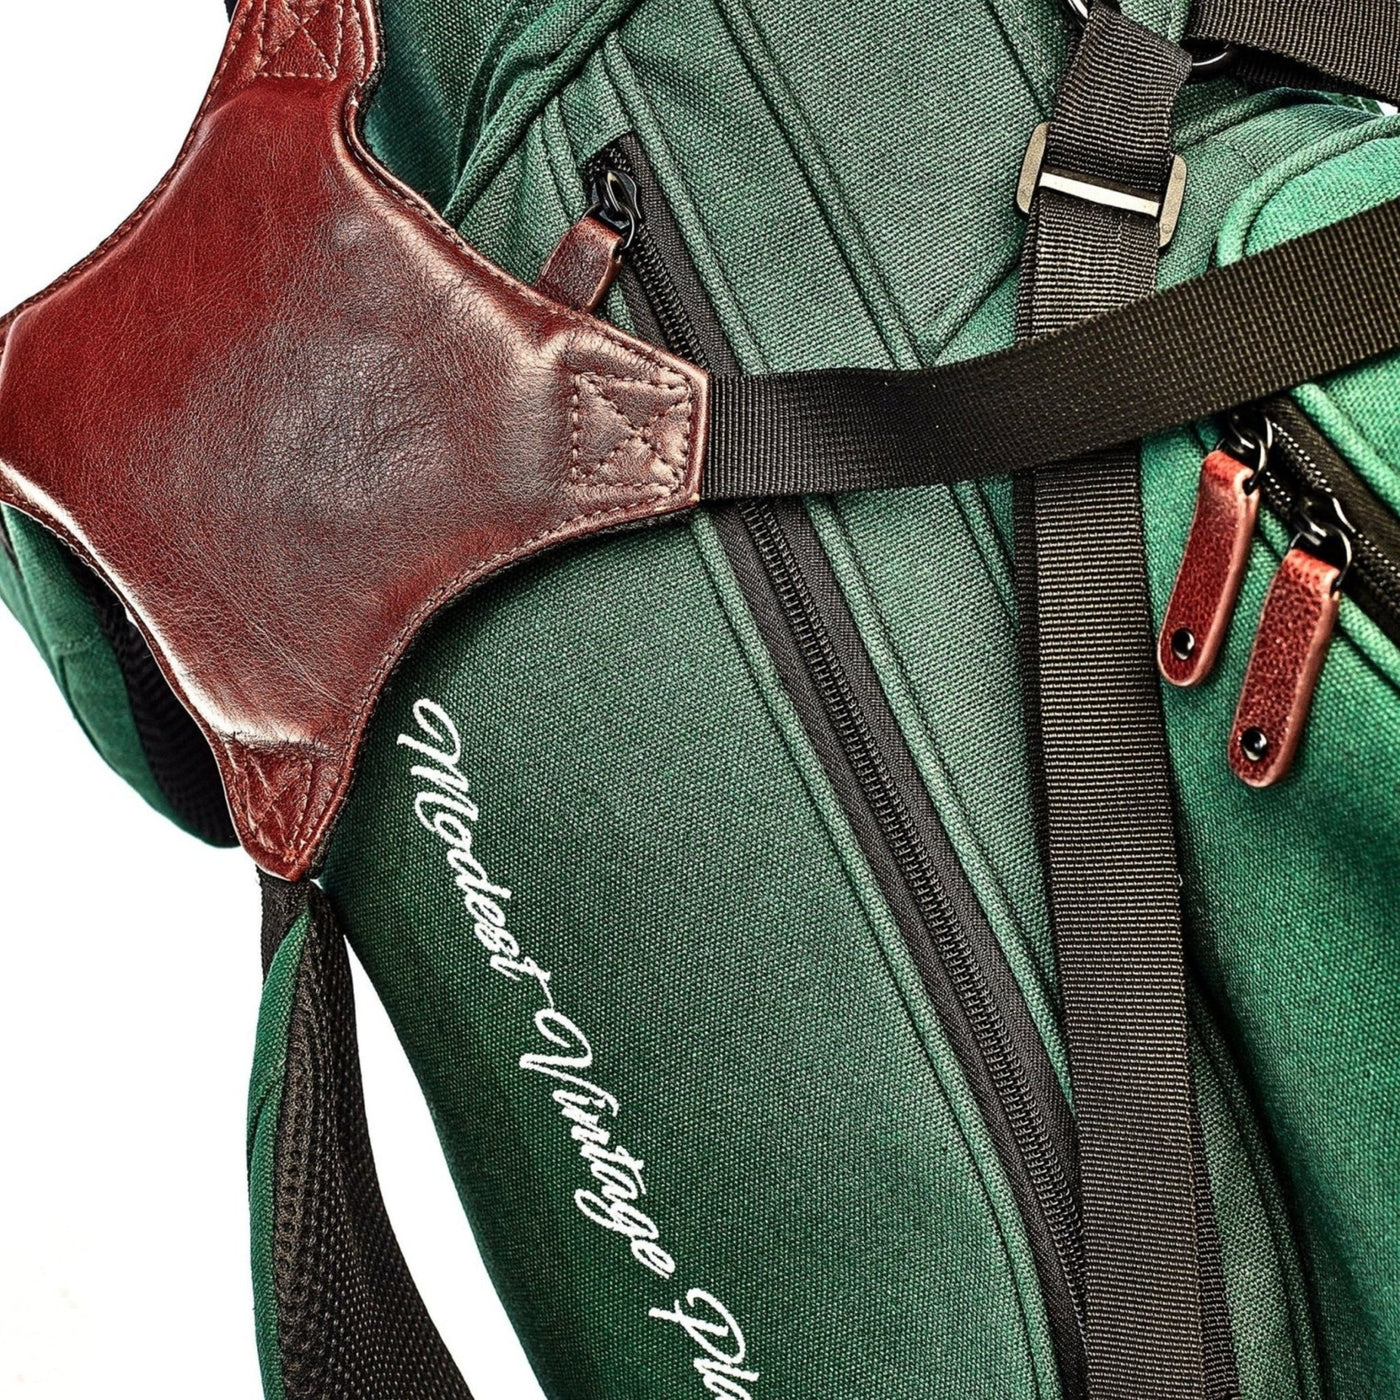 Green Canvas / Leather Golf Bag - Stand - MODEST VINTAGE PLAYER LTD